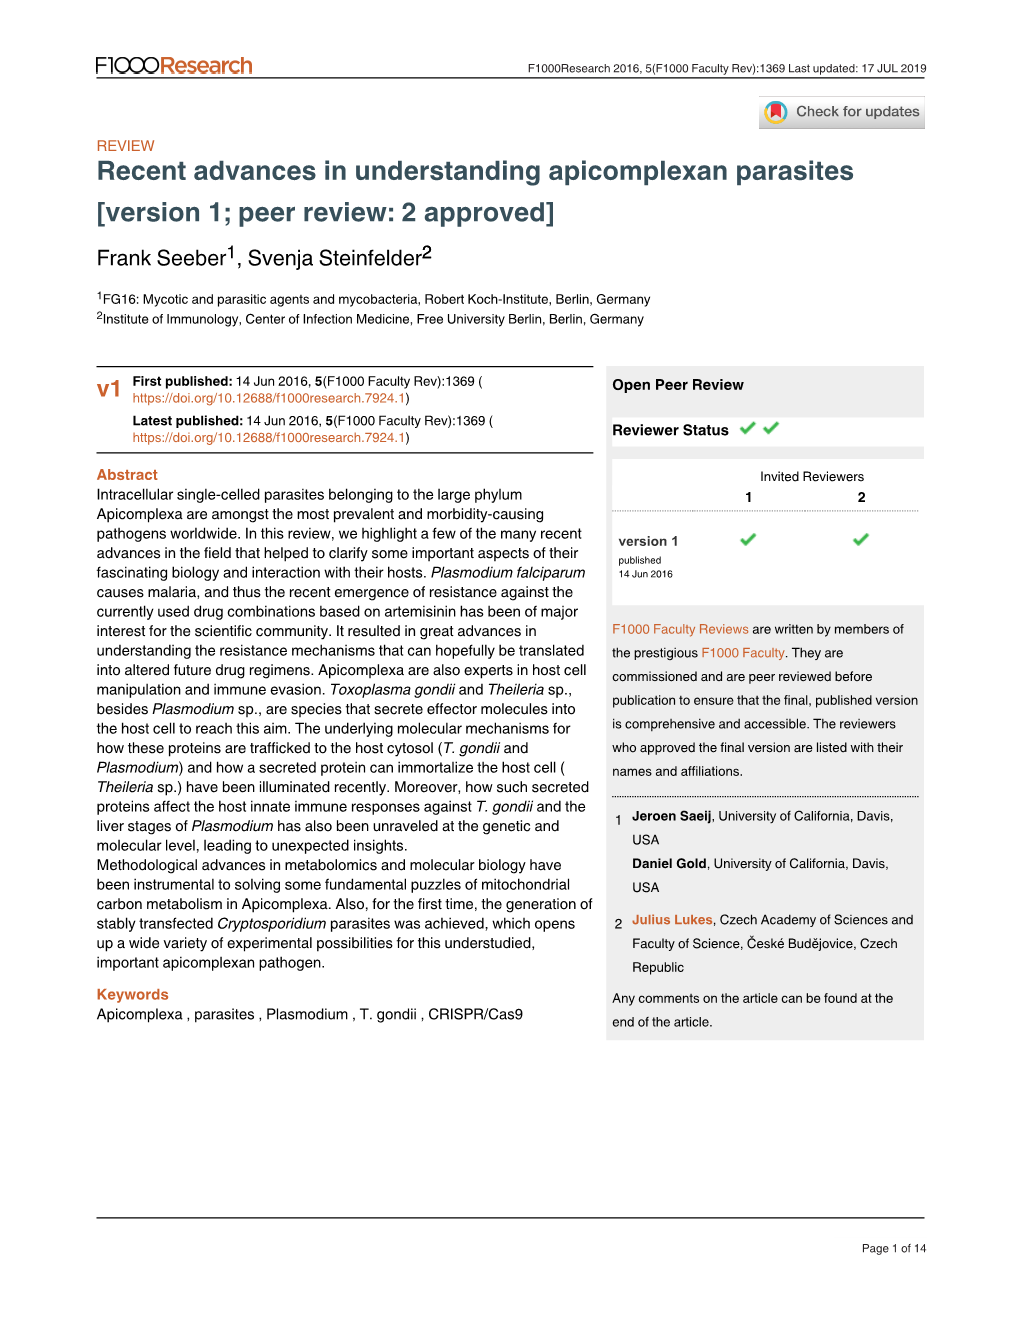 Recent Advances in Understanding Apicomplexan Parasites [Version 1; Peer Review: 2 Approved] Frank Seeber1, Svenja Steinfelder2